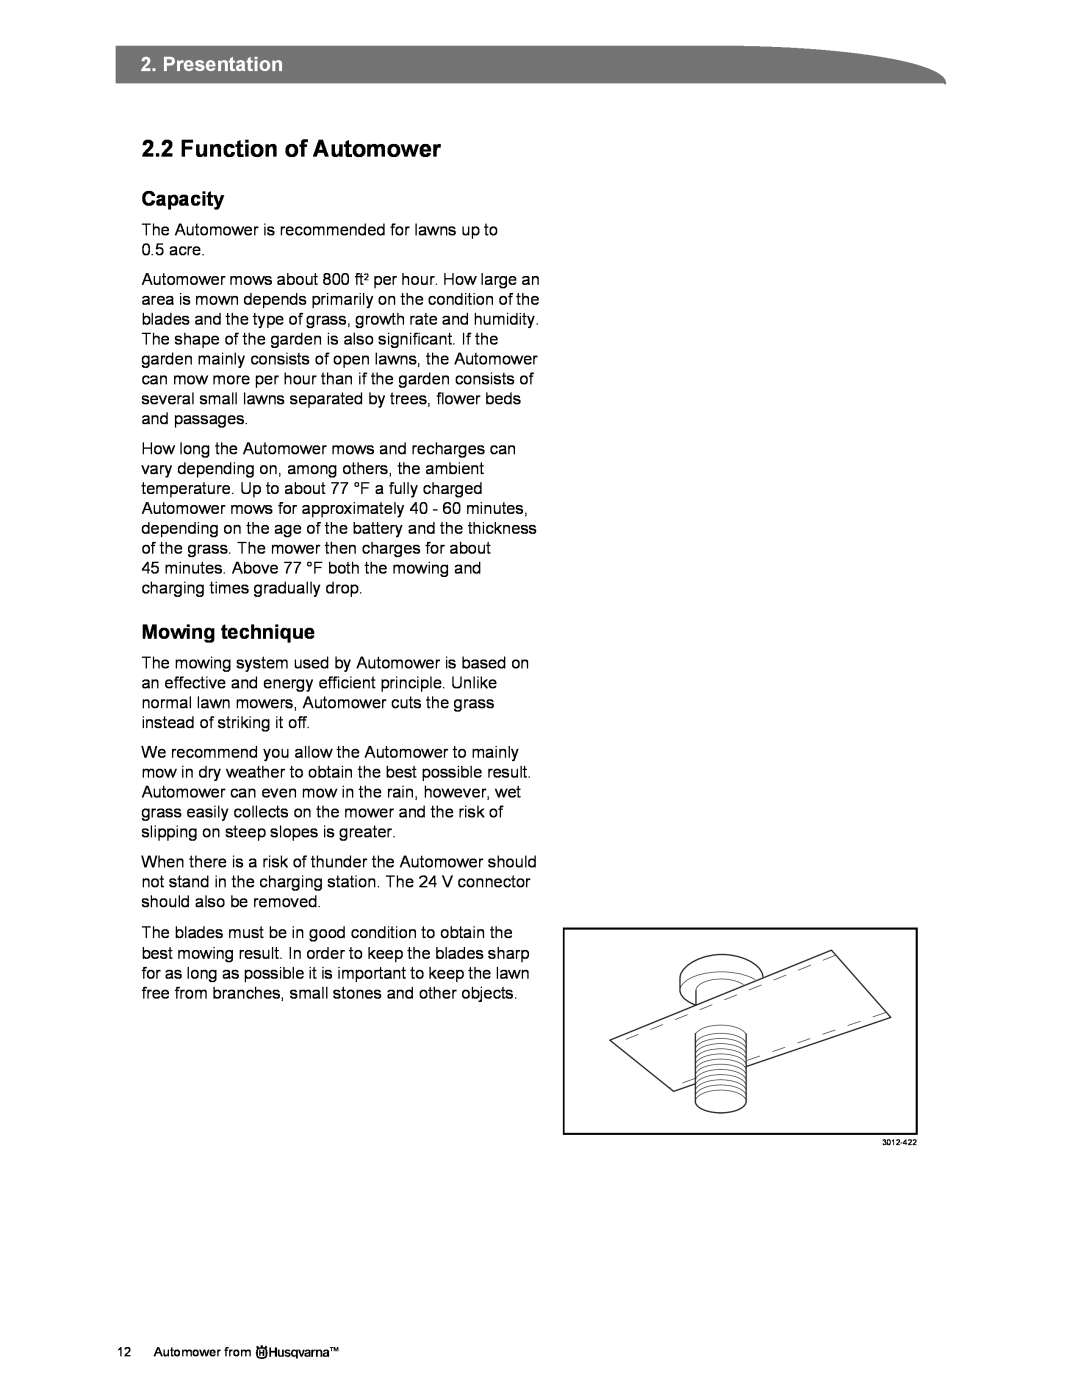 Husqvarna manual Function of Automower, Capacity, Mowing technique, Presentation 